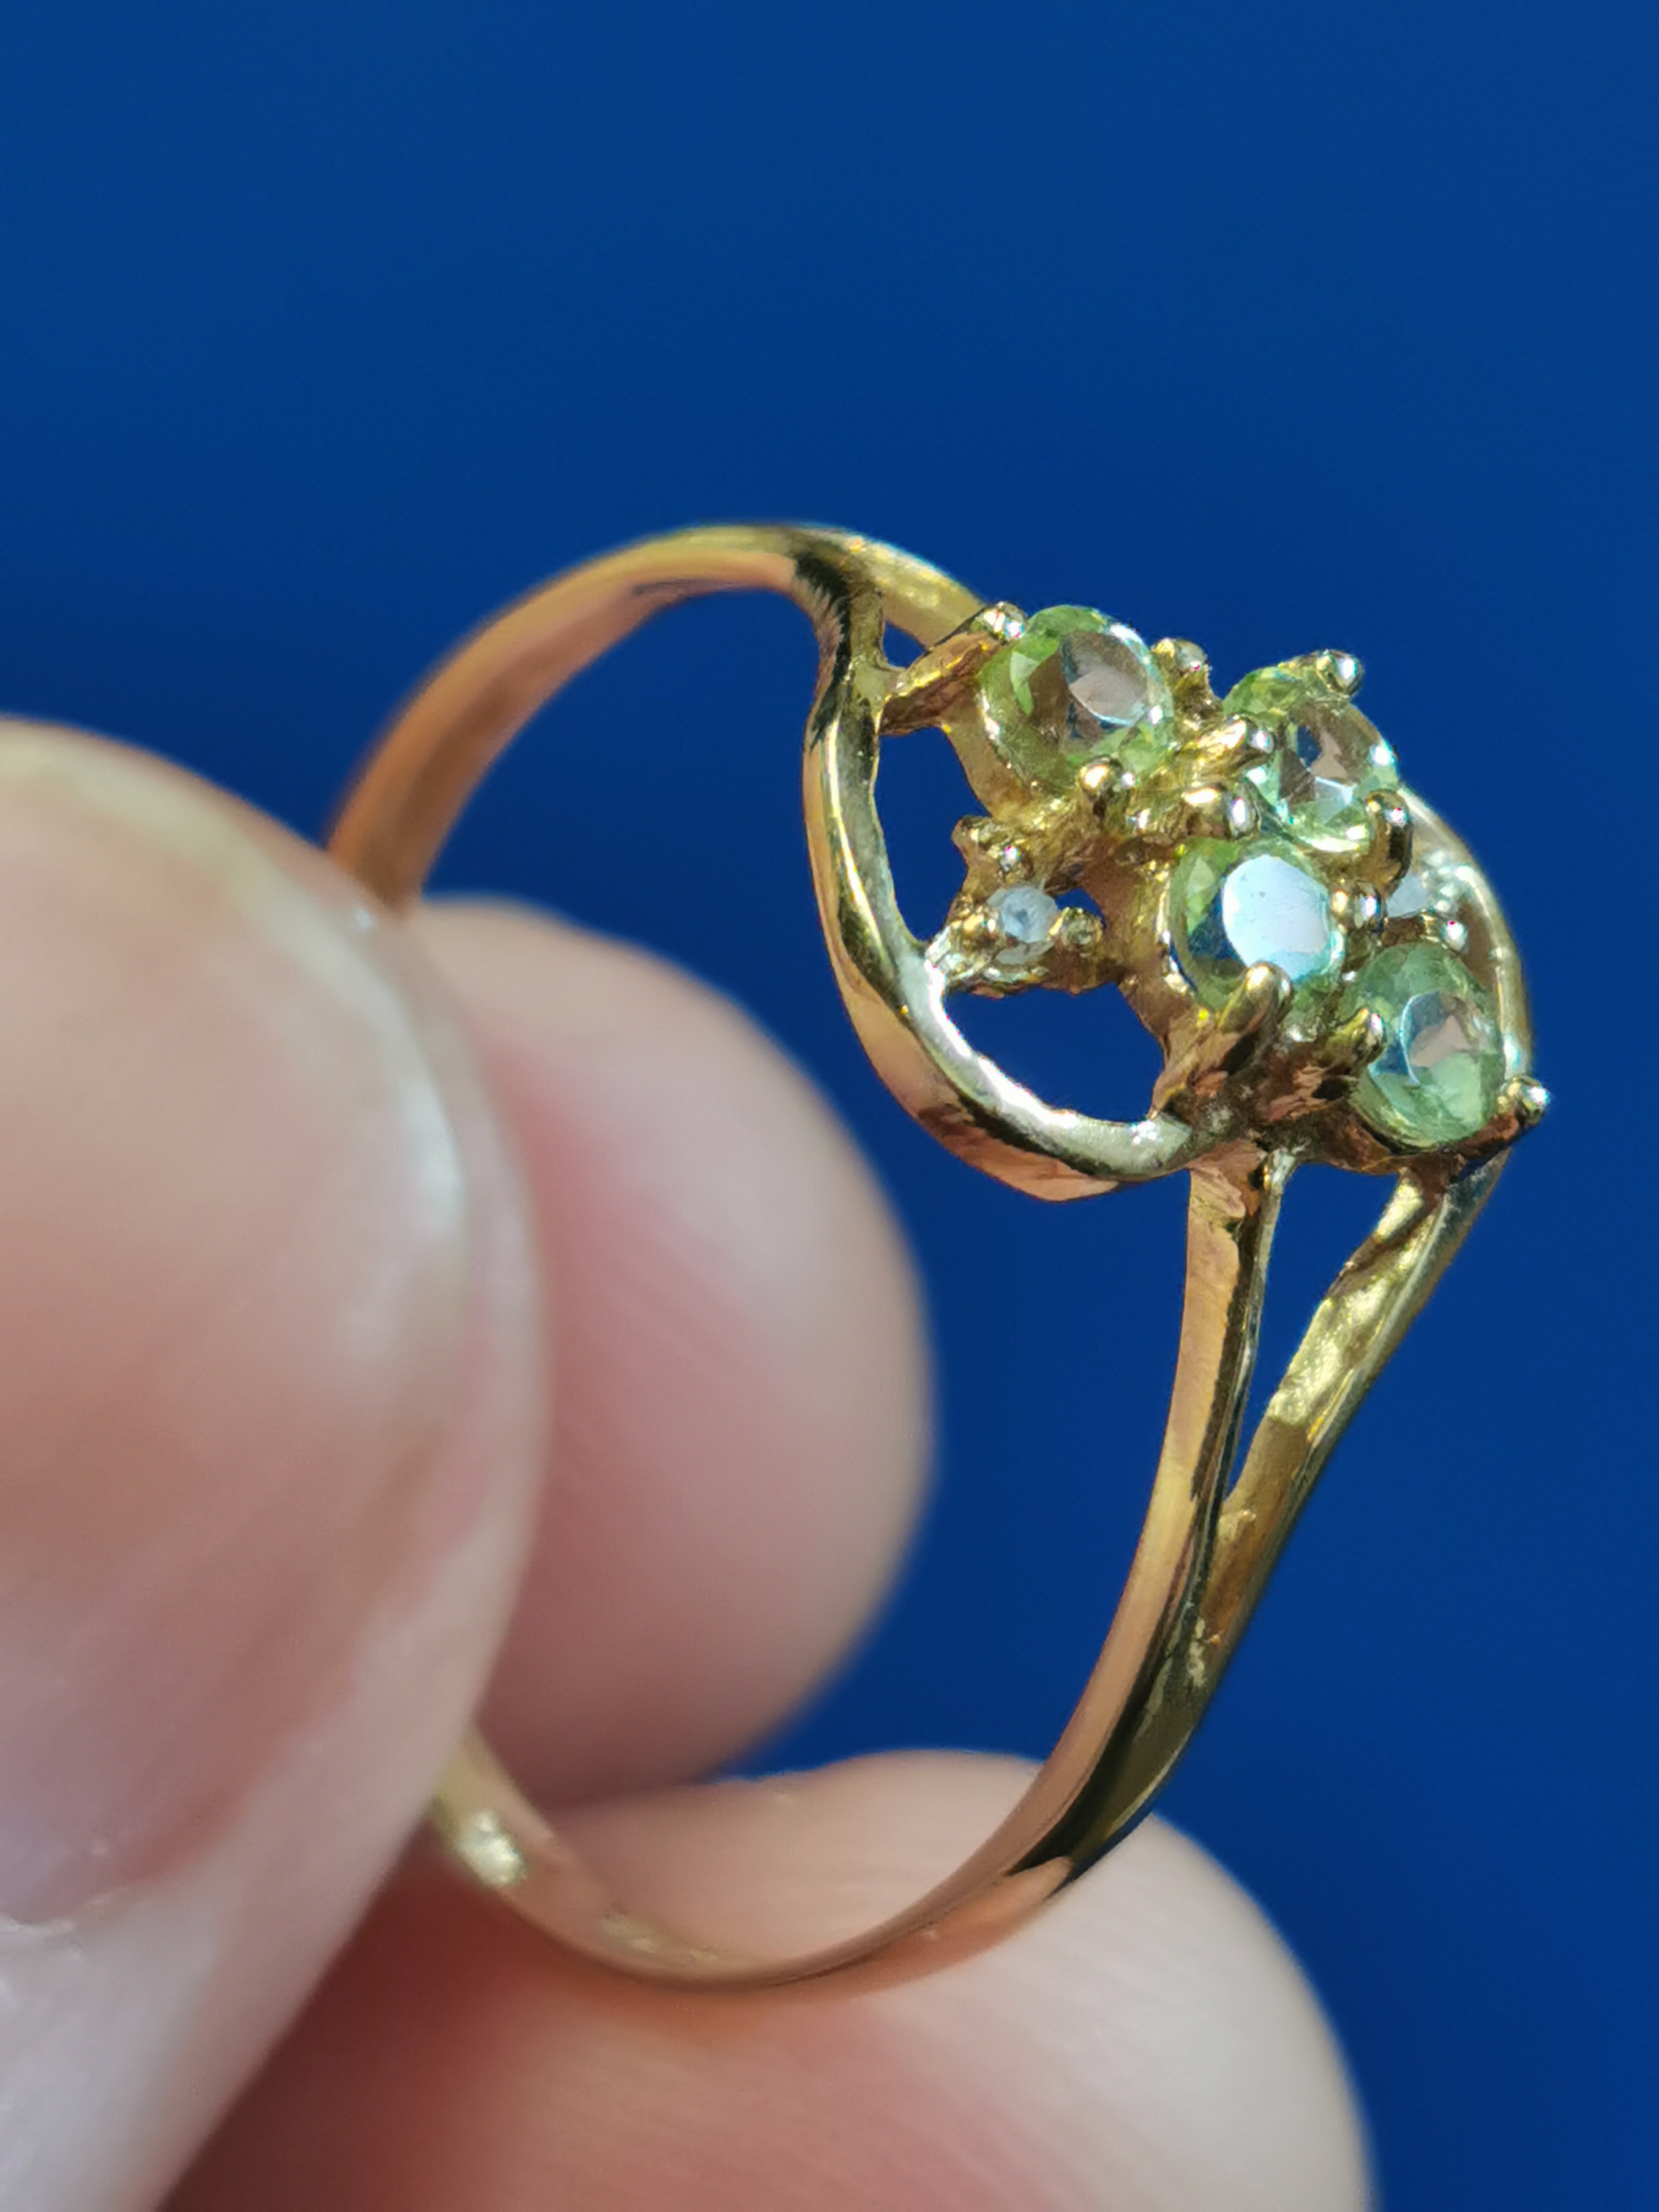 9ct Gold & Peridot Ring - Image 2 of 2